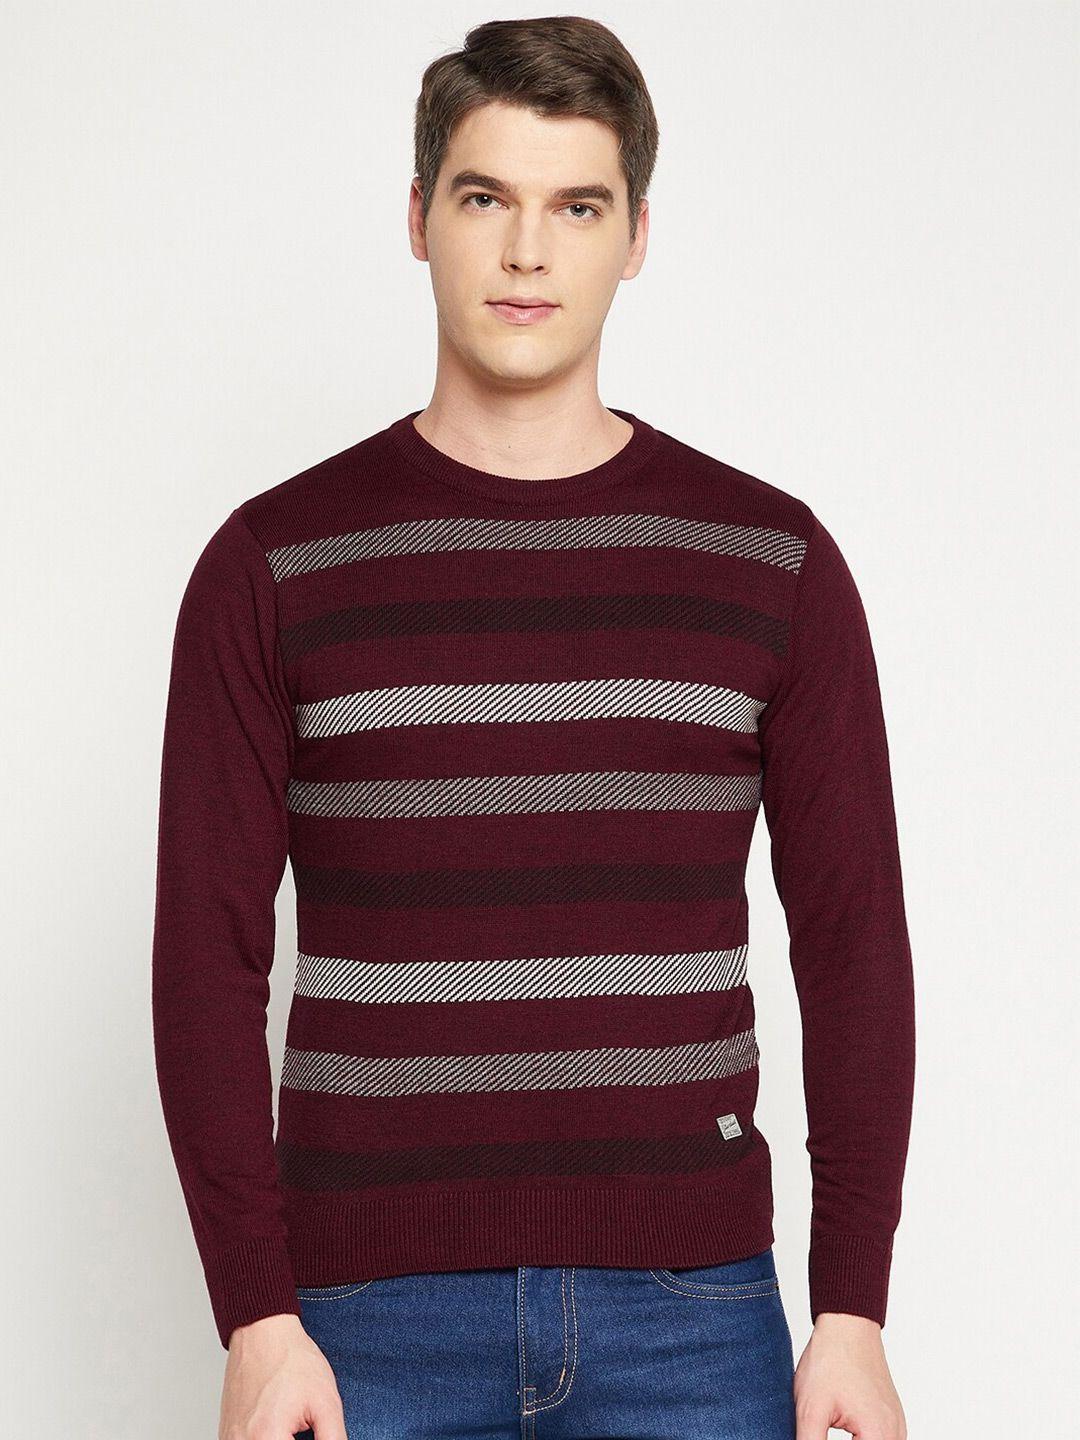 duke men maroon & grey striped pullover